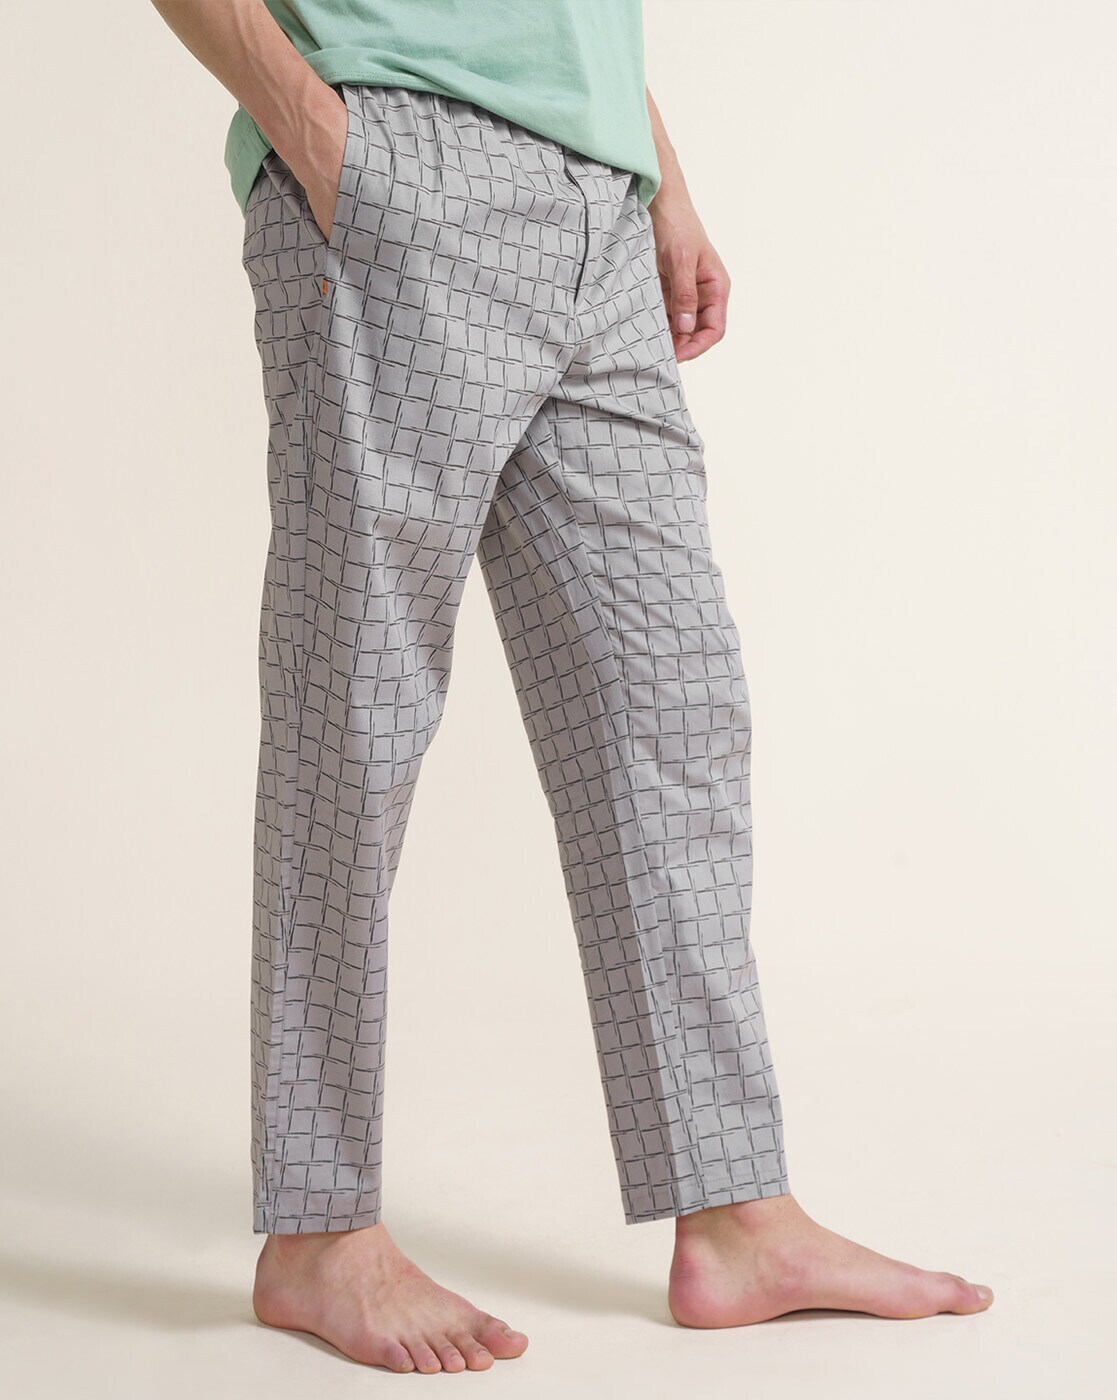 followMe Men's Microfleece Buffalo Plaid Pajama Pants with Pockets:  Comfortable Joggers (Red and Black Buffalo Plaid Jogger, X-Large) -  Walmart.com